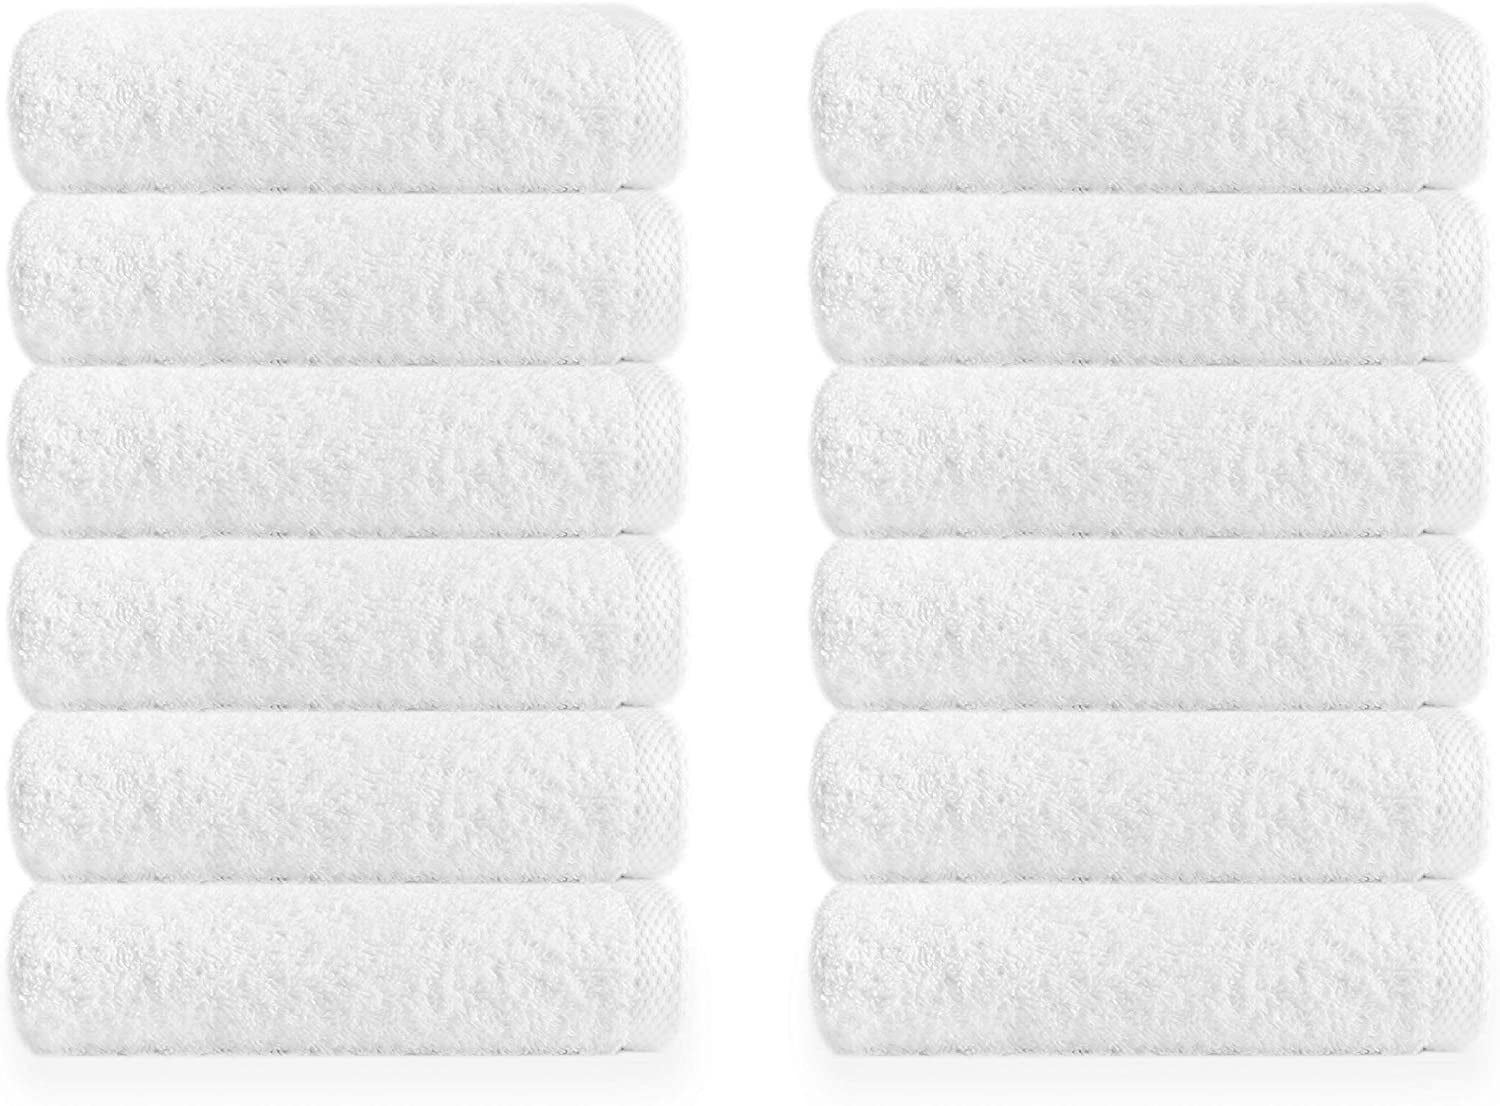 50 Dozen 600 Bulk Pack Washcloth Kitchen Towels,100% Cotton 1 lb/dz 12x12 